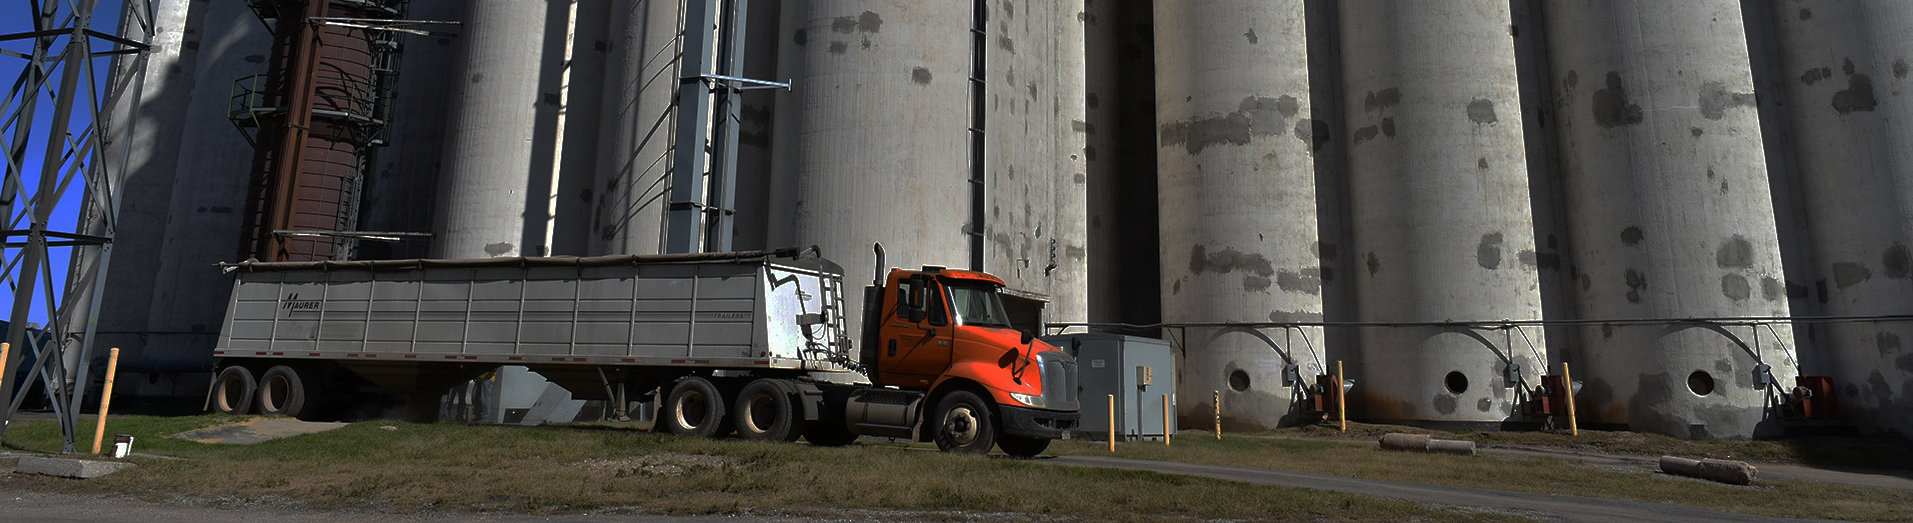 Grain silos and a truck